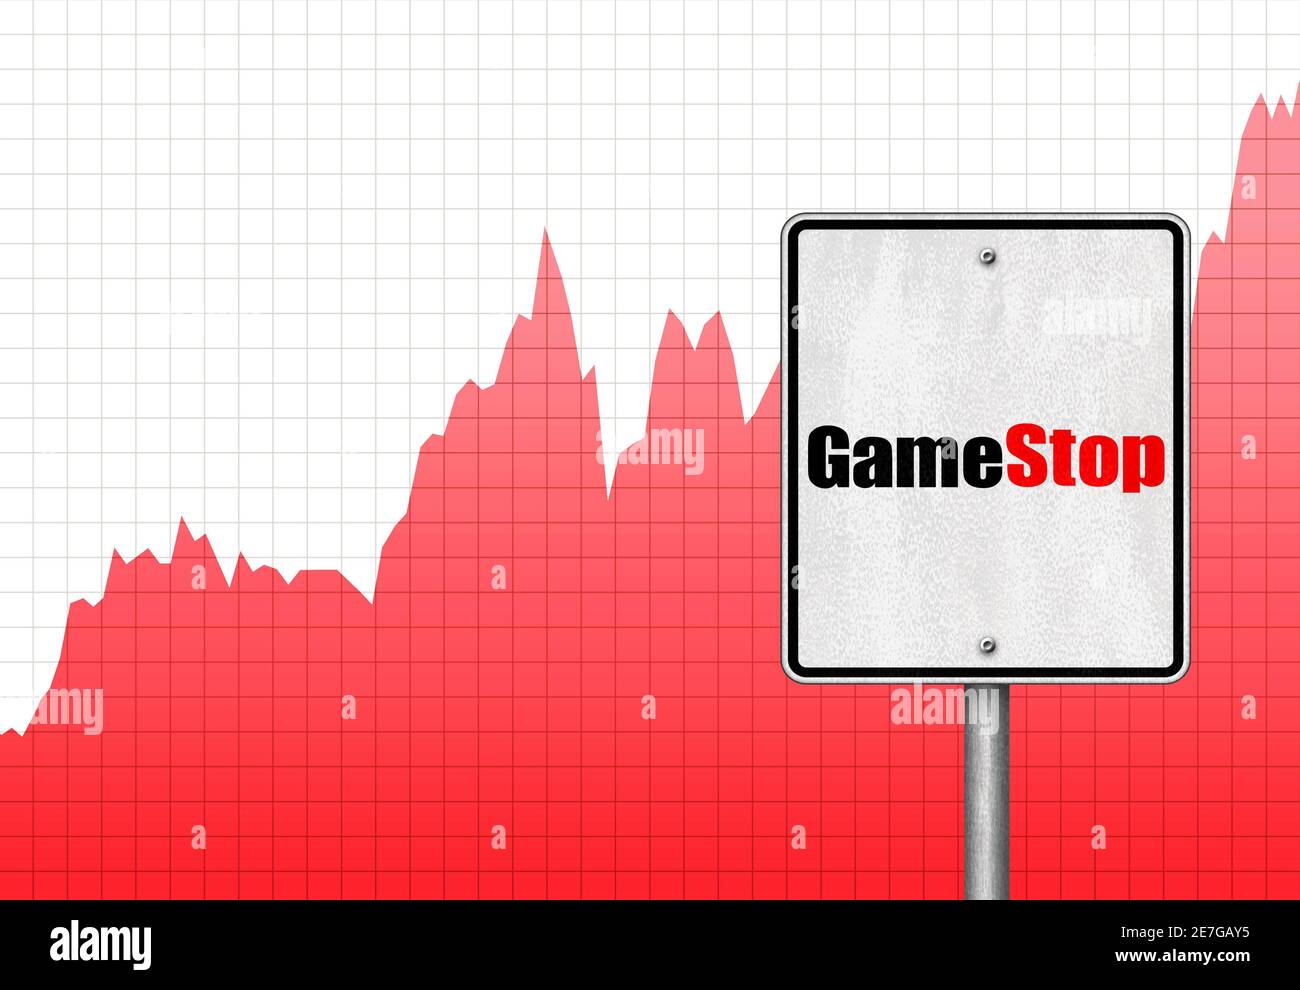 GameStop stock market Stock Photo